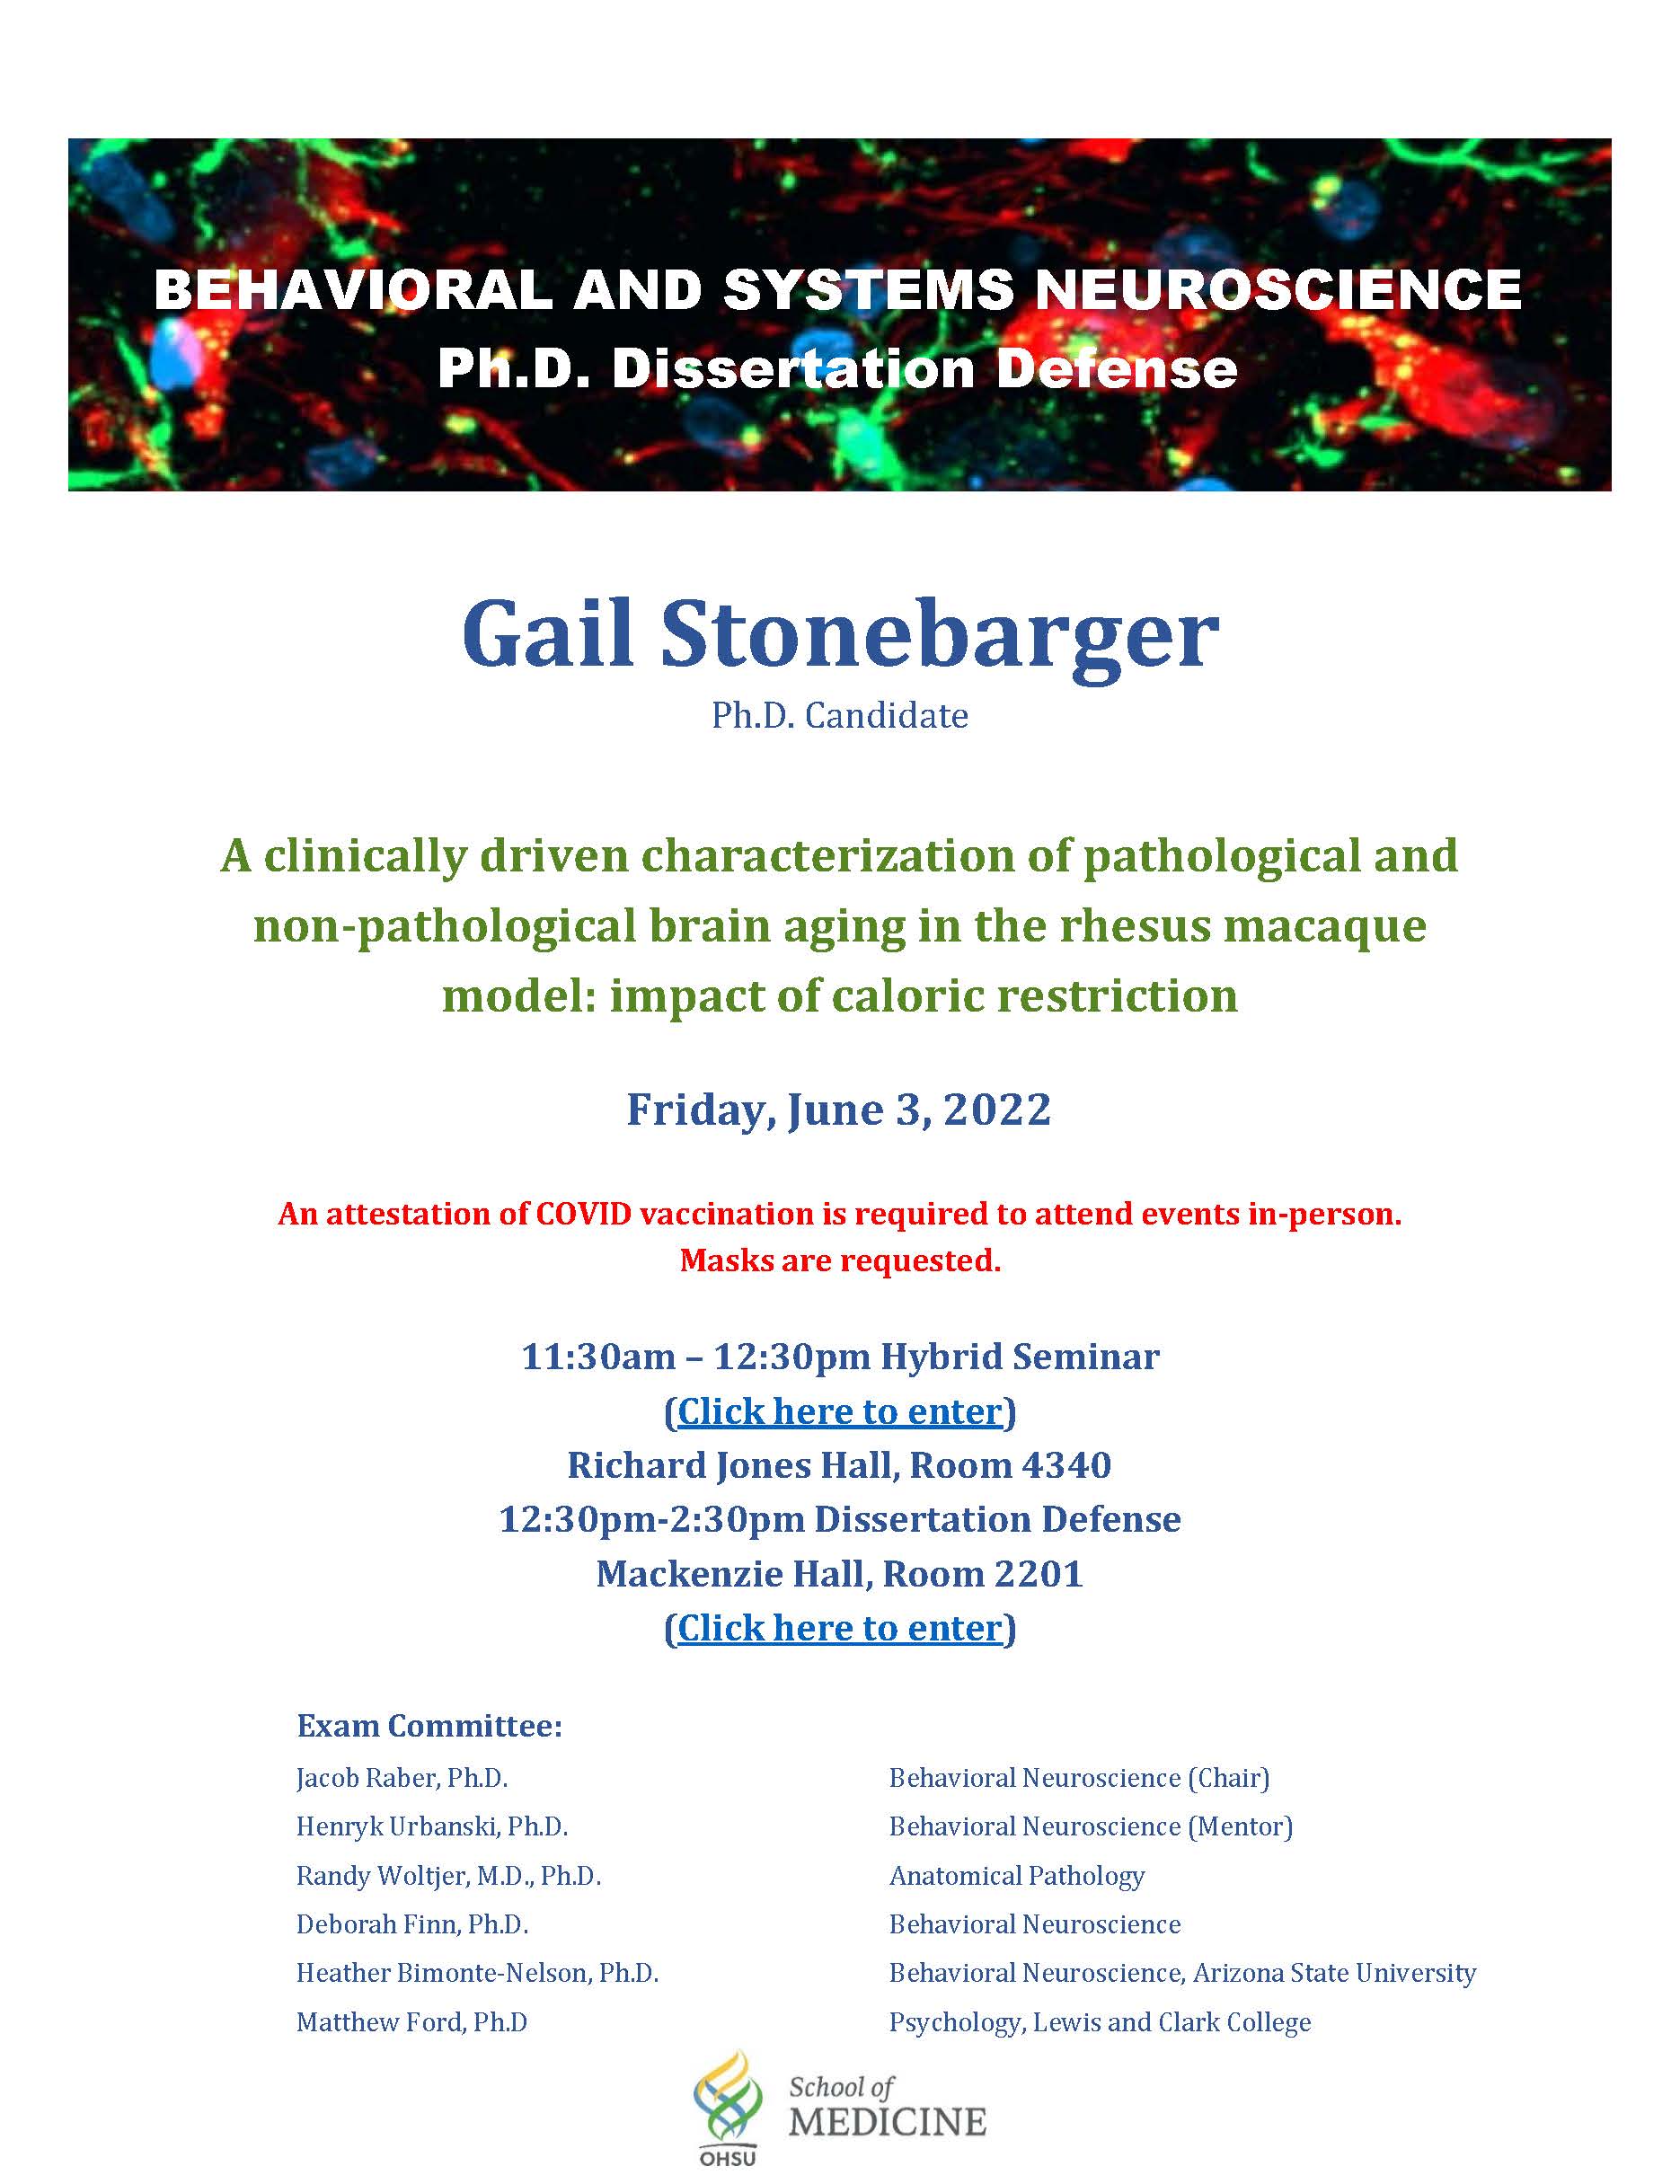 Gail Stonebarger Ph.D. Dissertation Defense Flyer